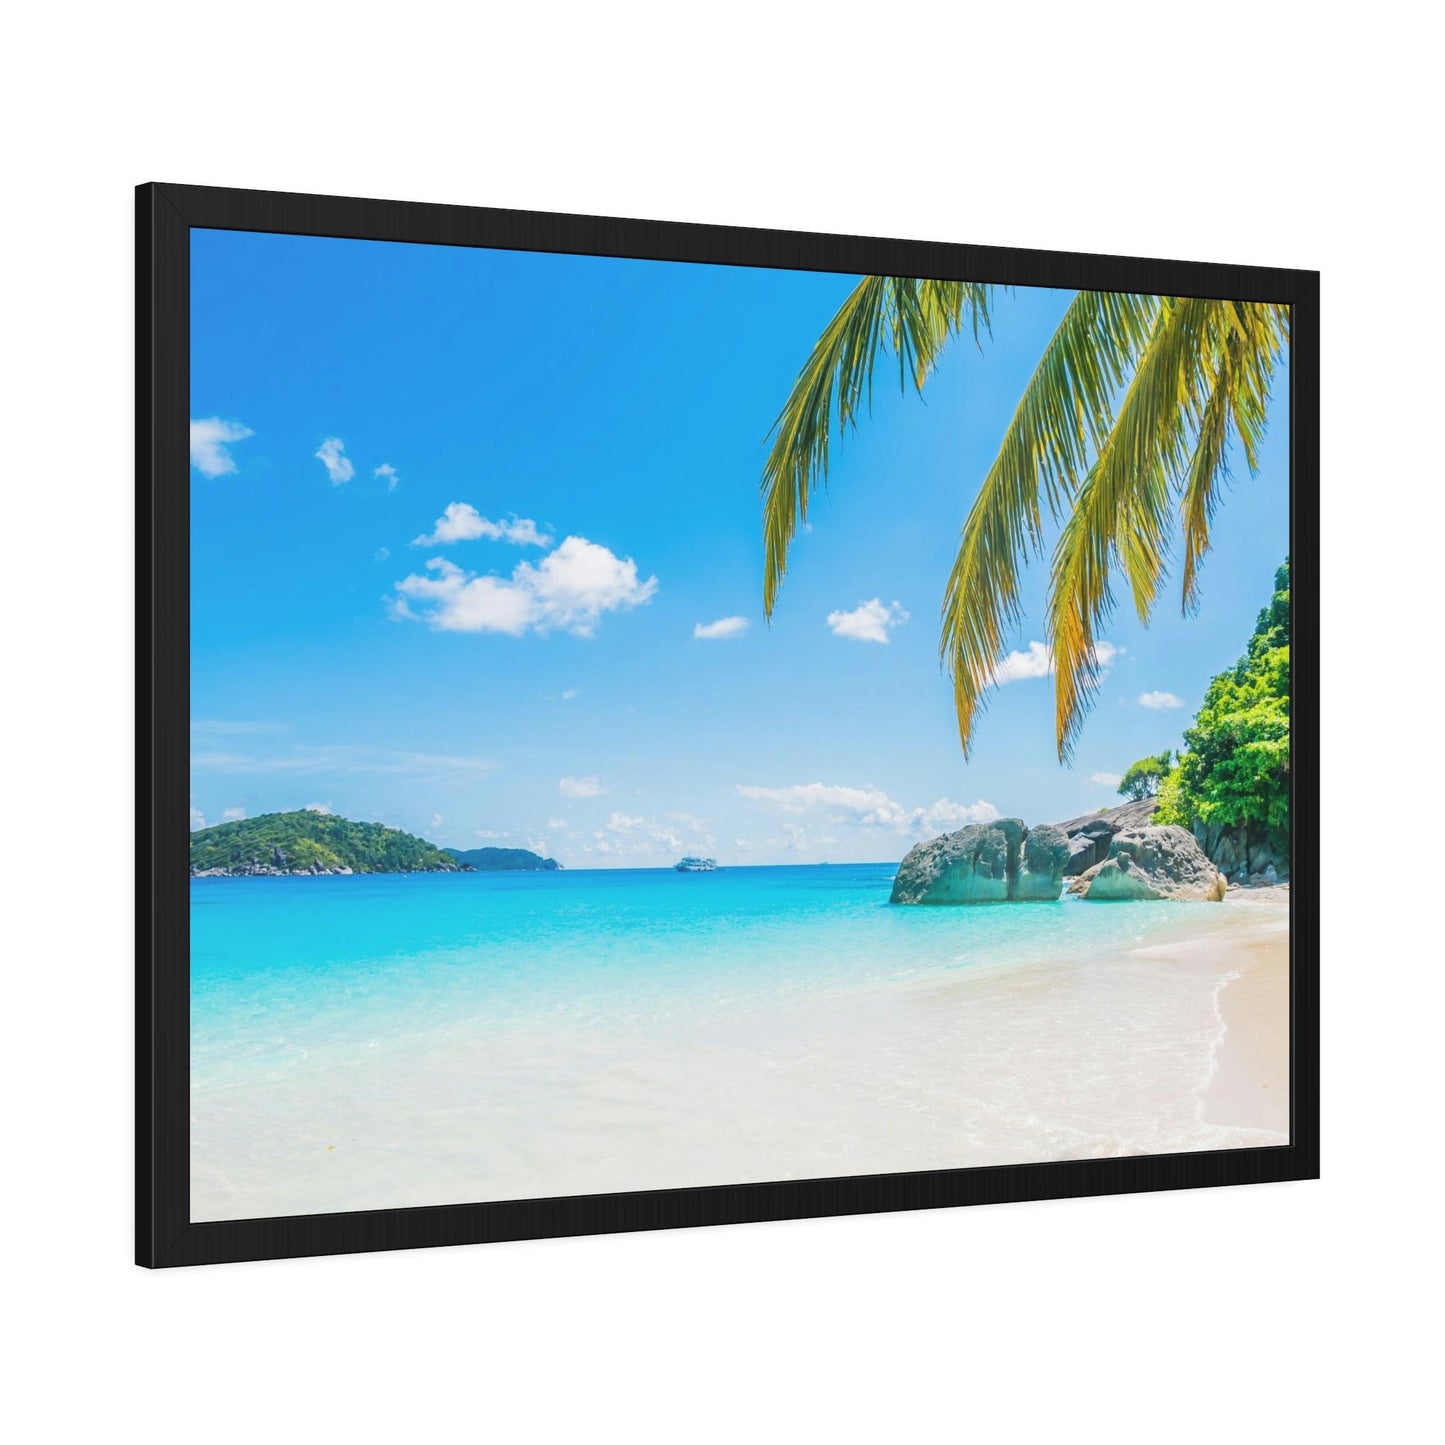 Seaside Escape: Framed Canvas & Poster of a Dreamy Island Beach Getaway